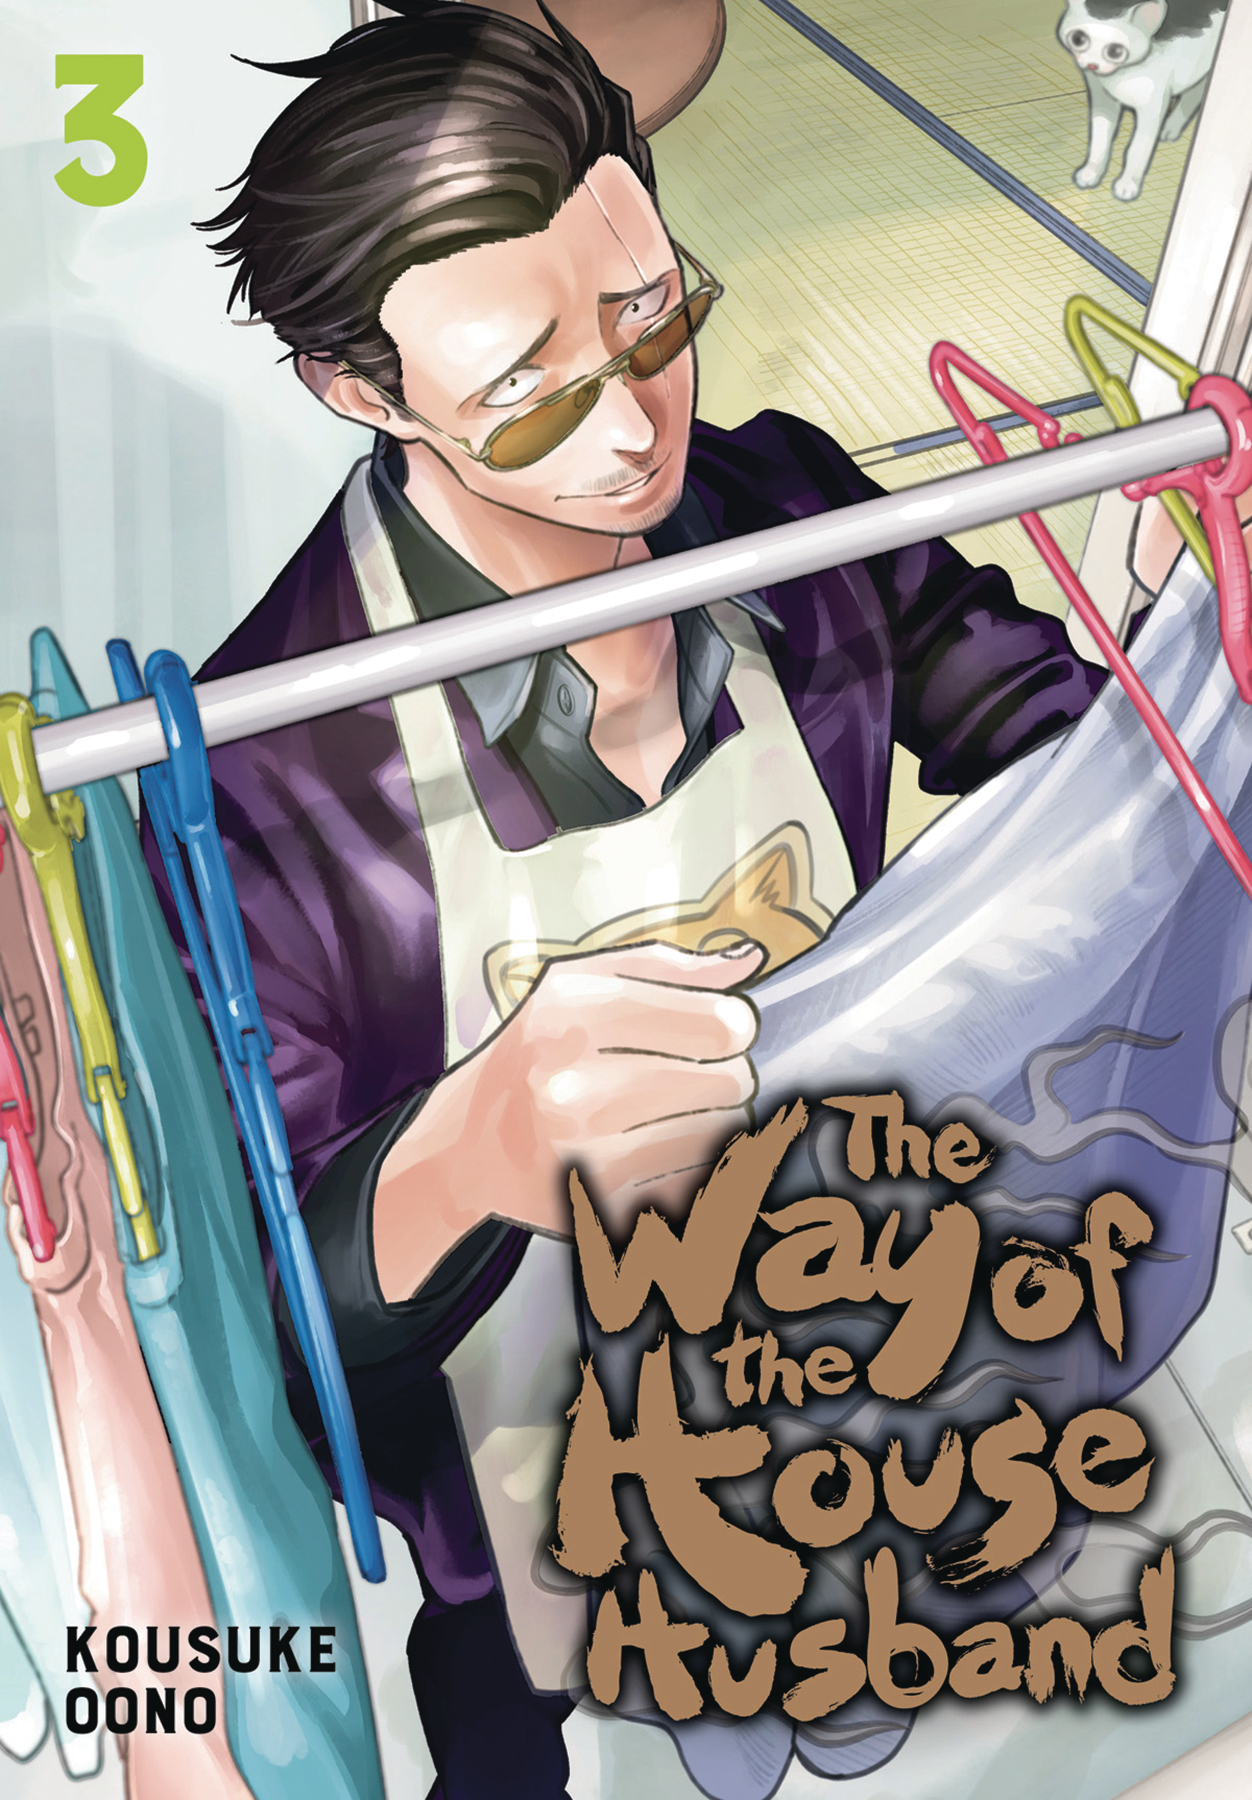 Way of the Househusband Manga Volume 3